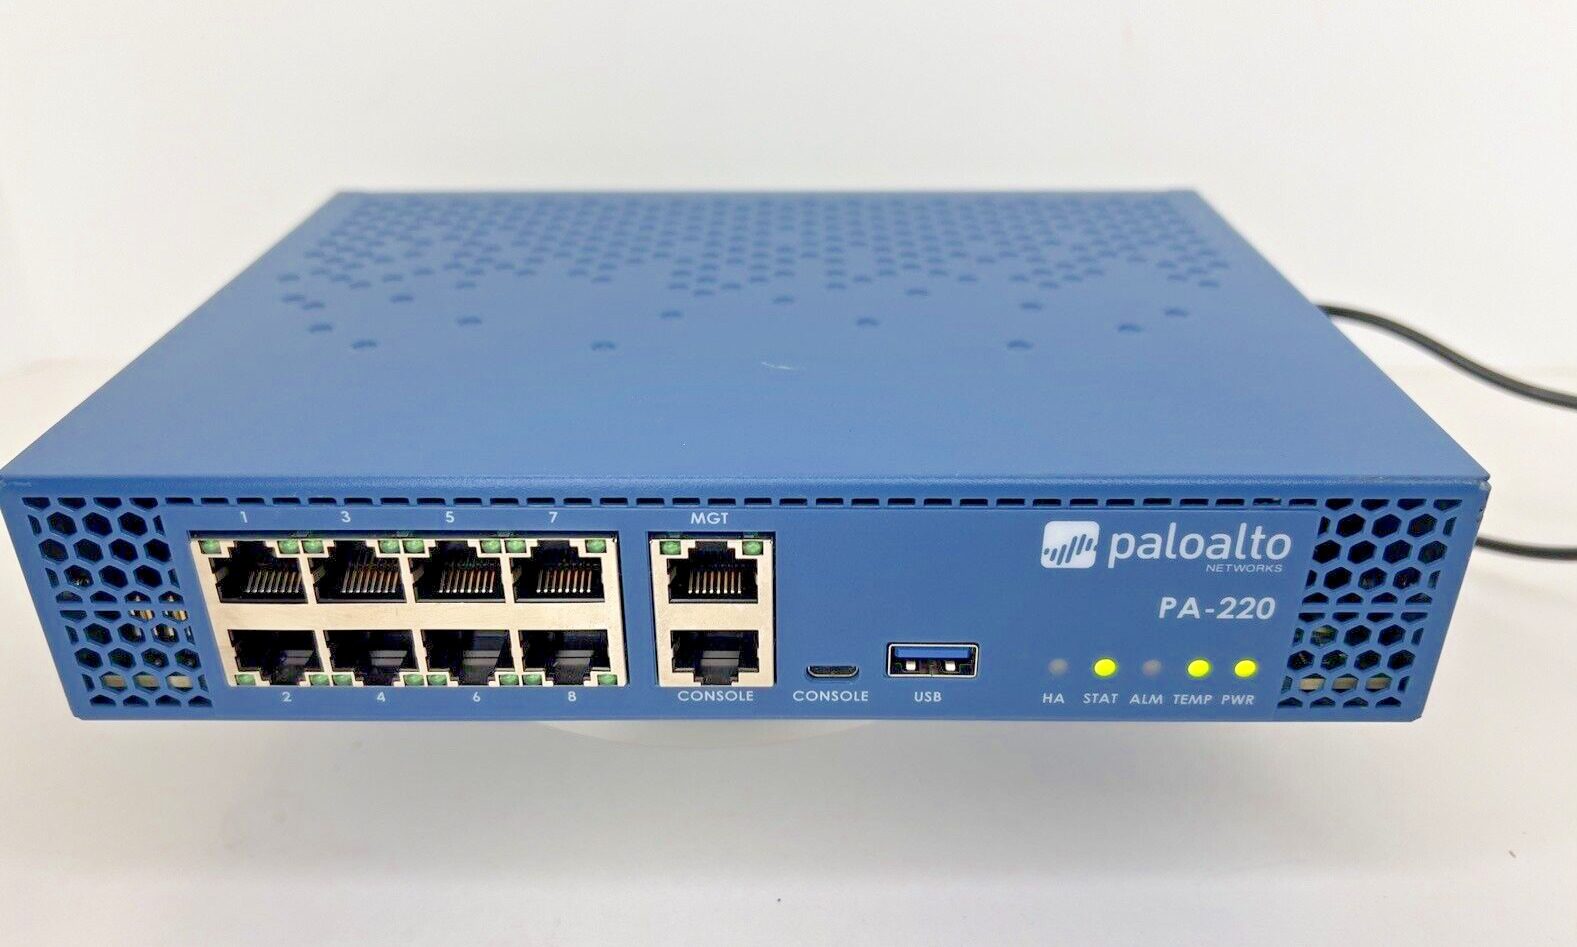 Palo Alto Networks PA-220 Next-Gen Firewall 750-000128-00 w/AC Power Adapter x2